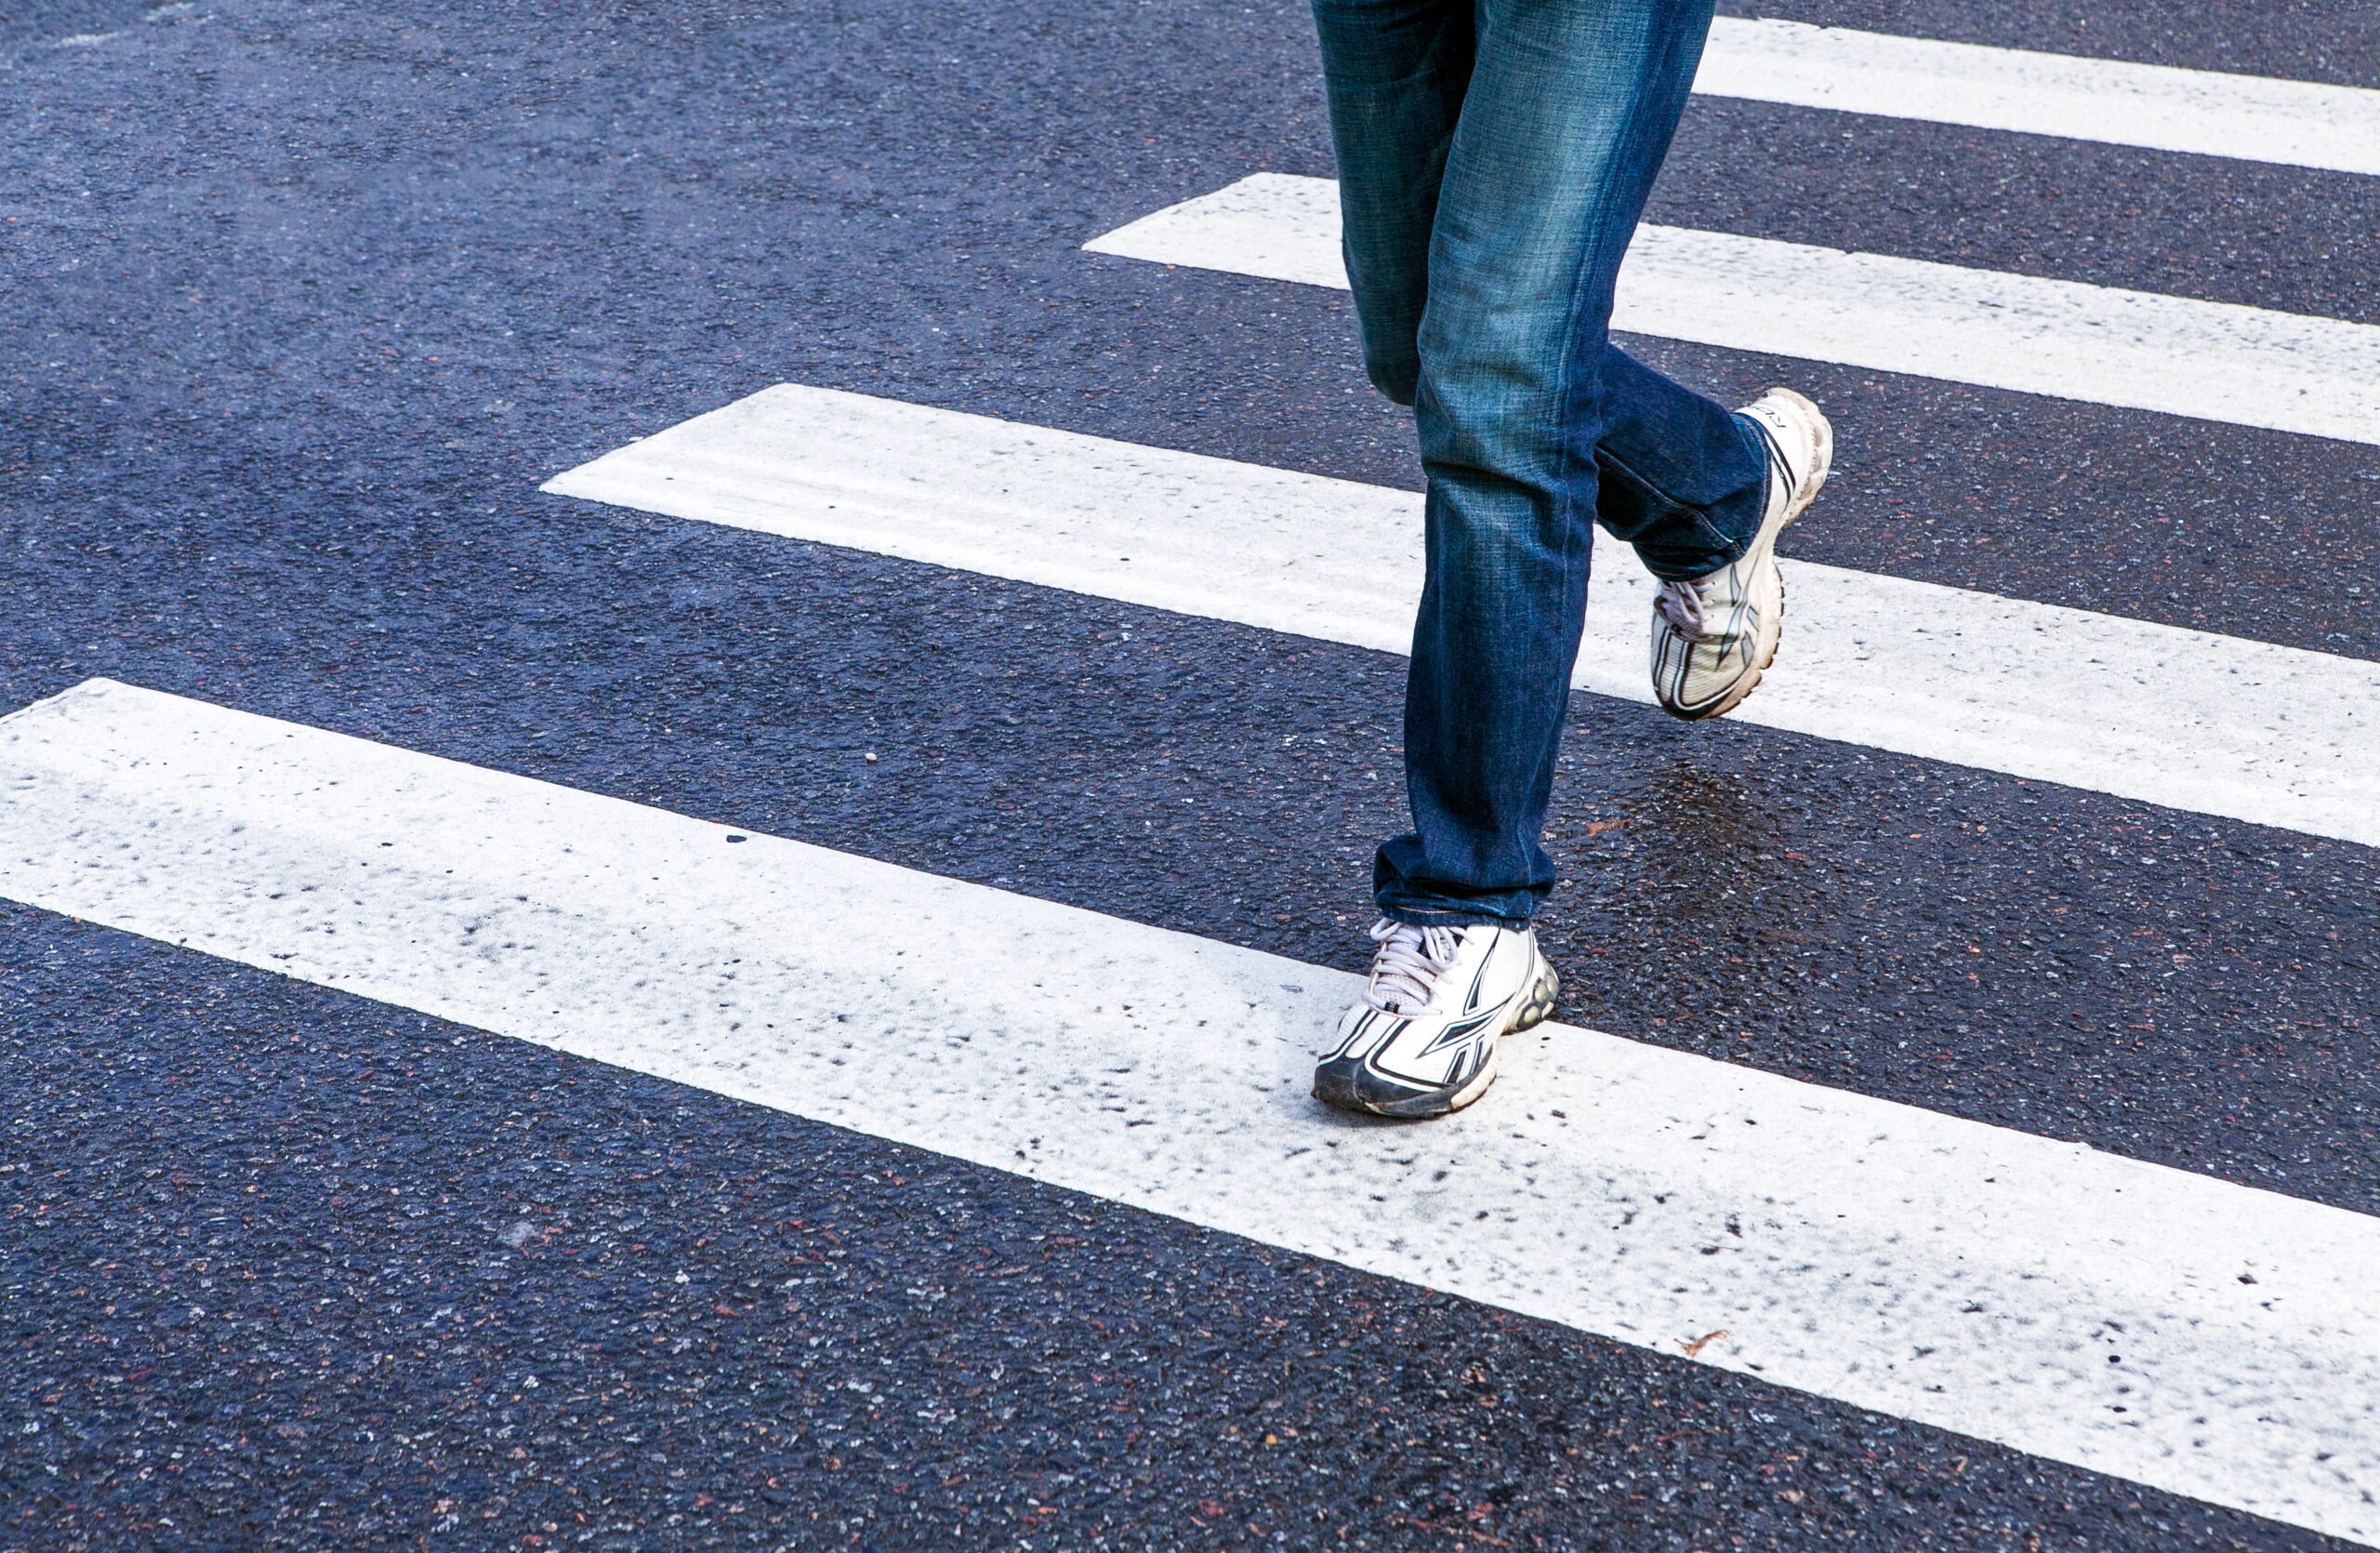 Pedestrian Traffic Deaths on the Rise